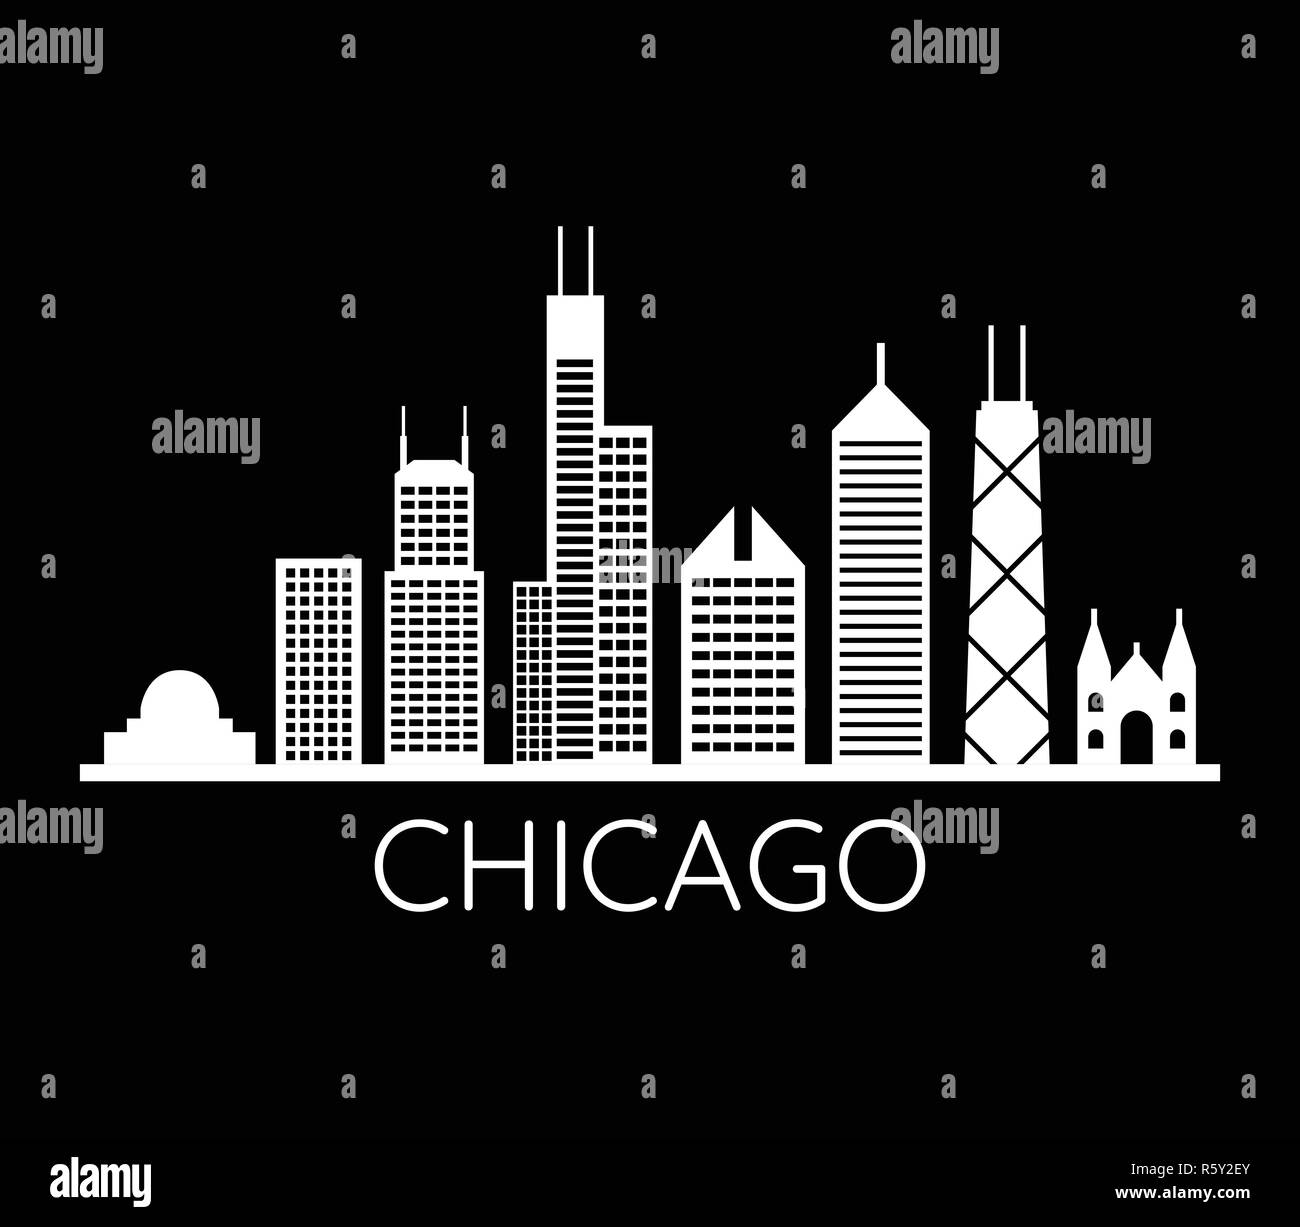 chicago skyline on white background Stock Vector